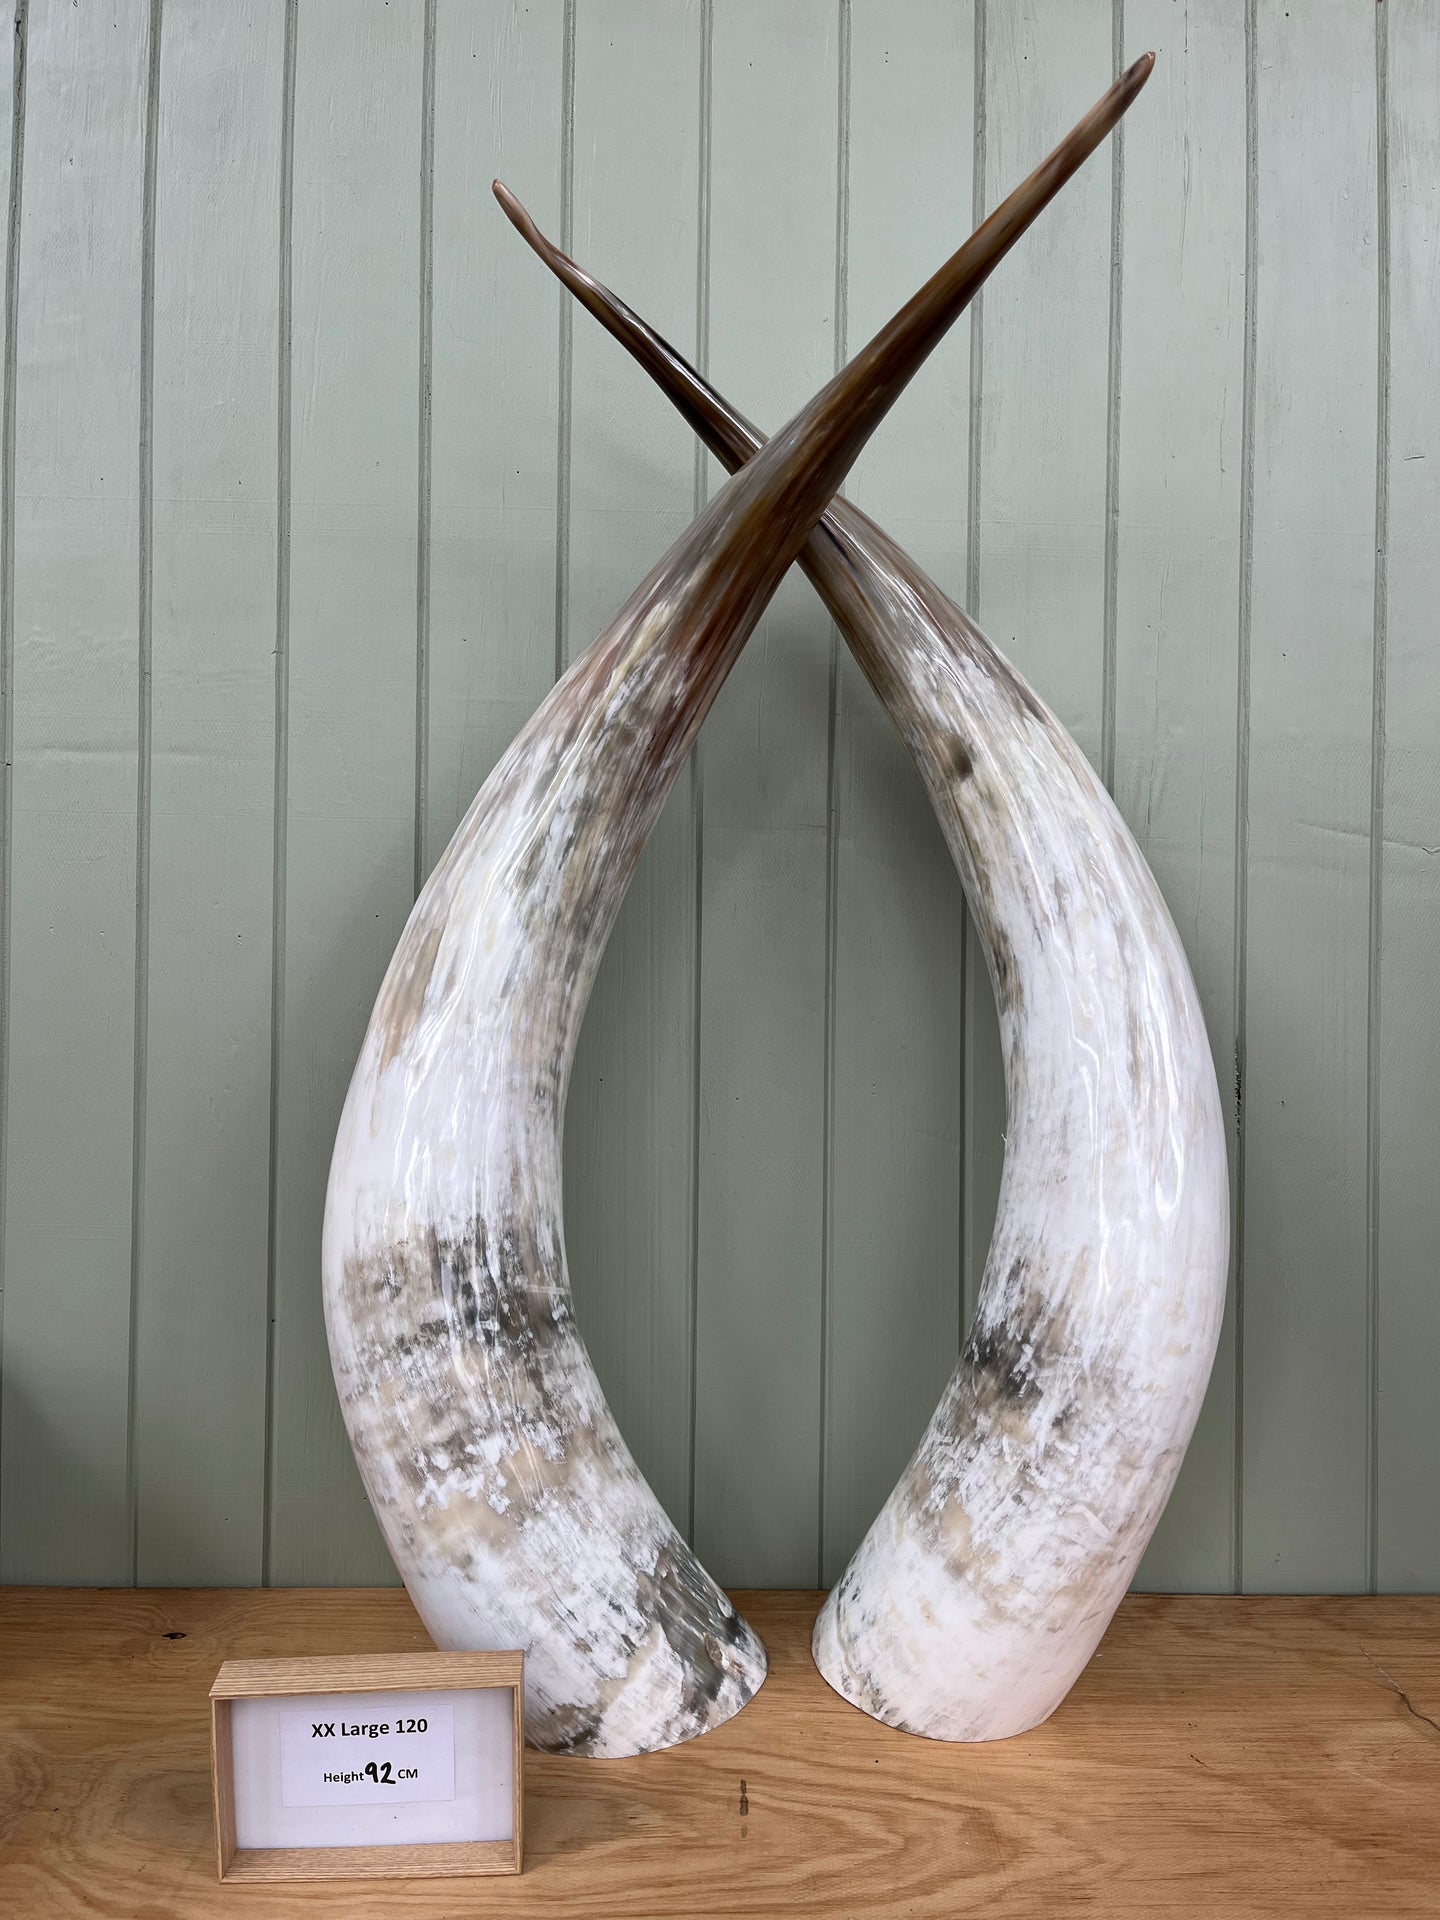 Ankole Cattle Horns - XX Large 120